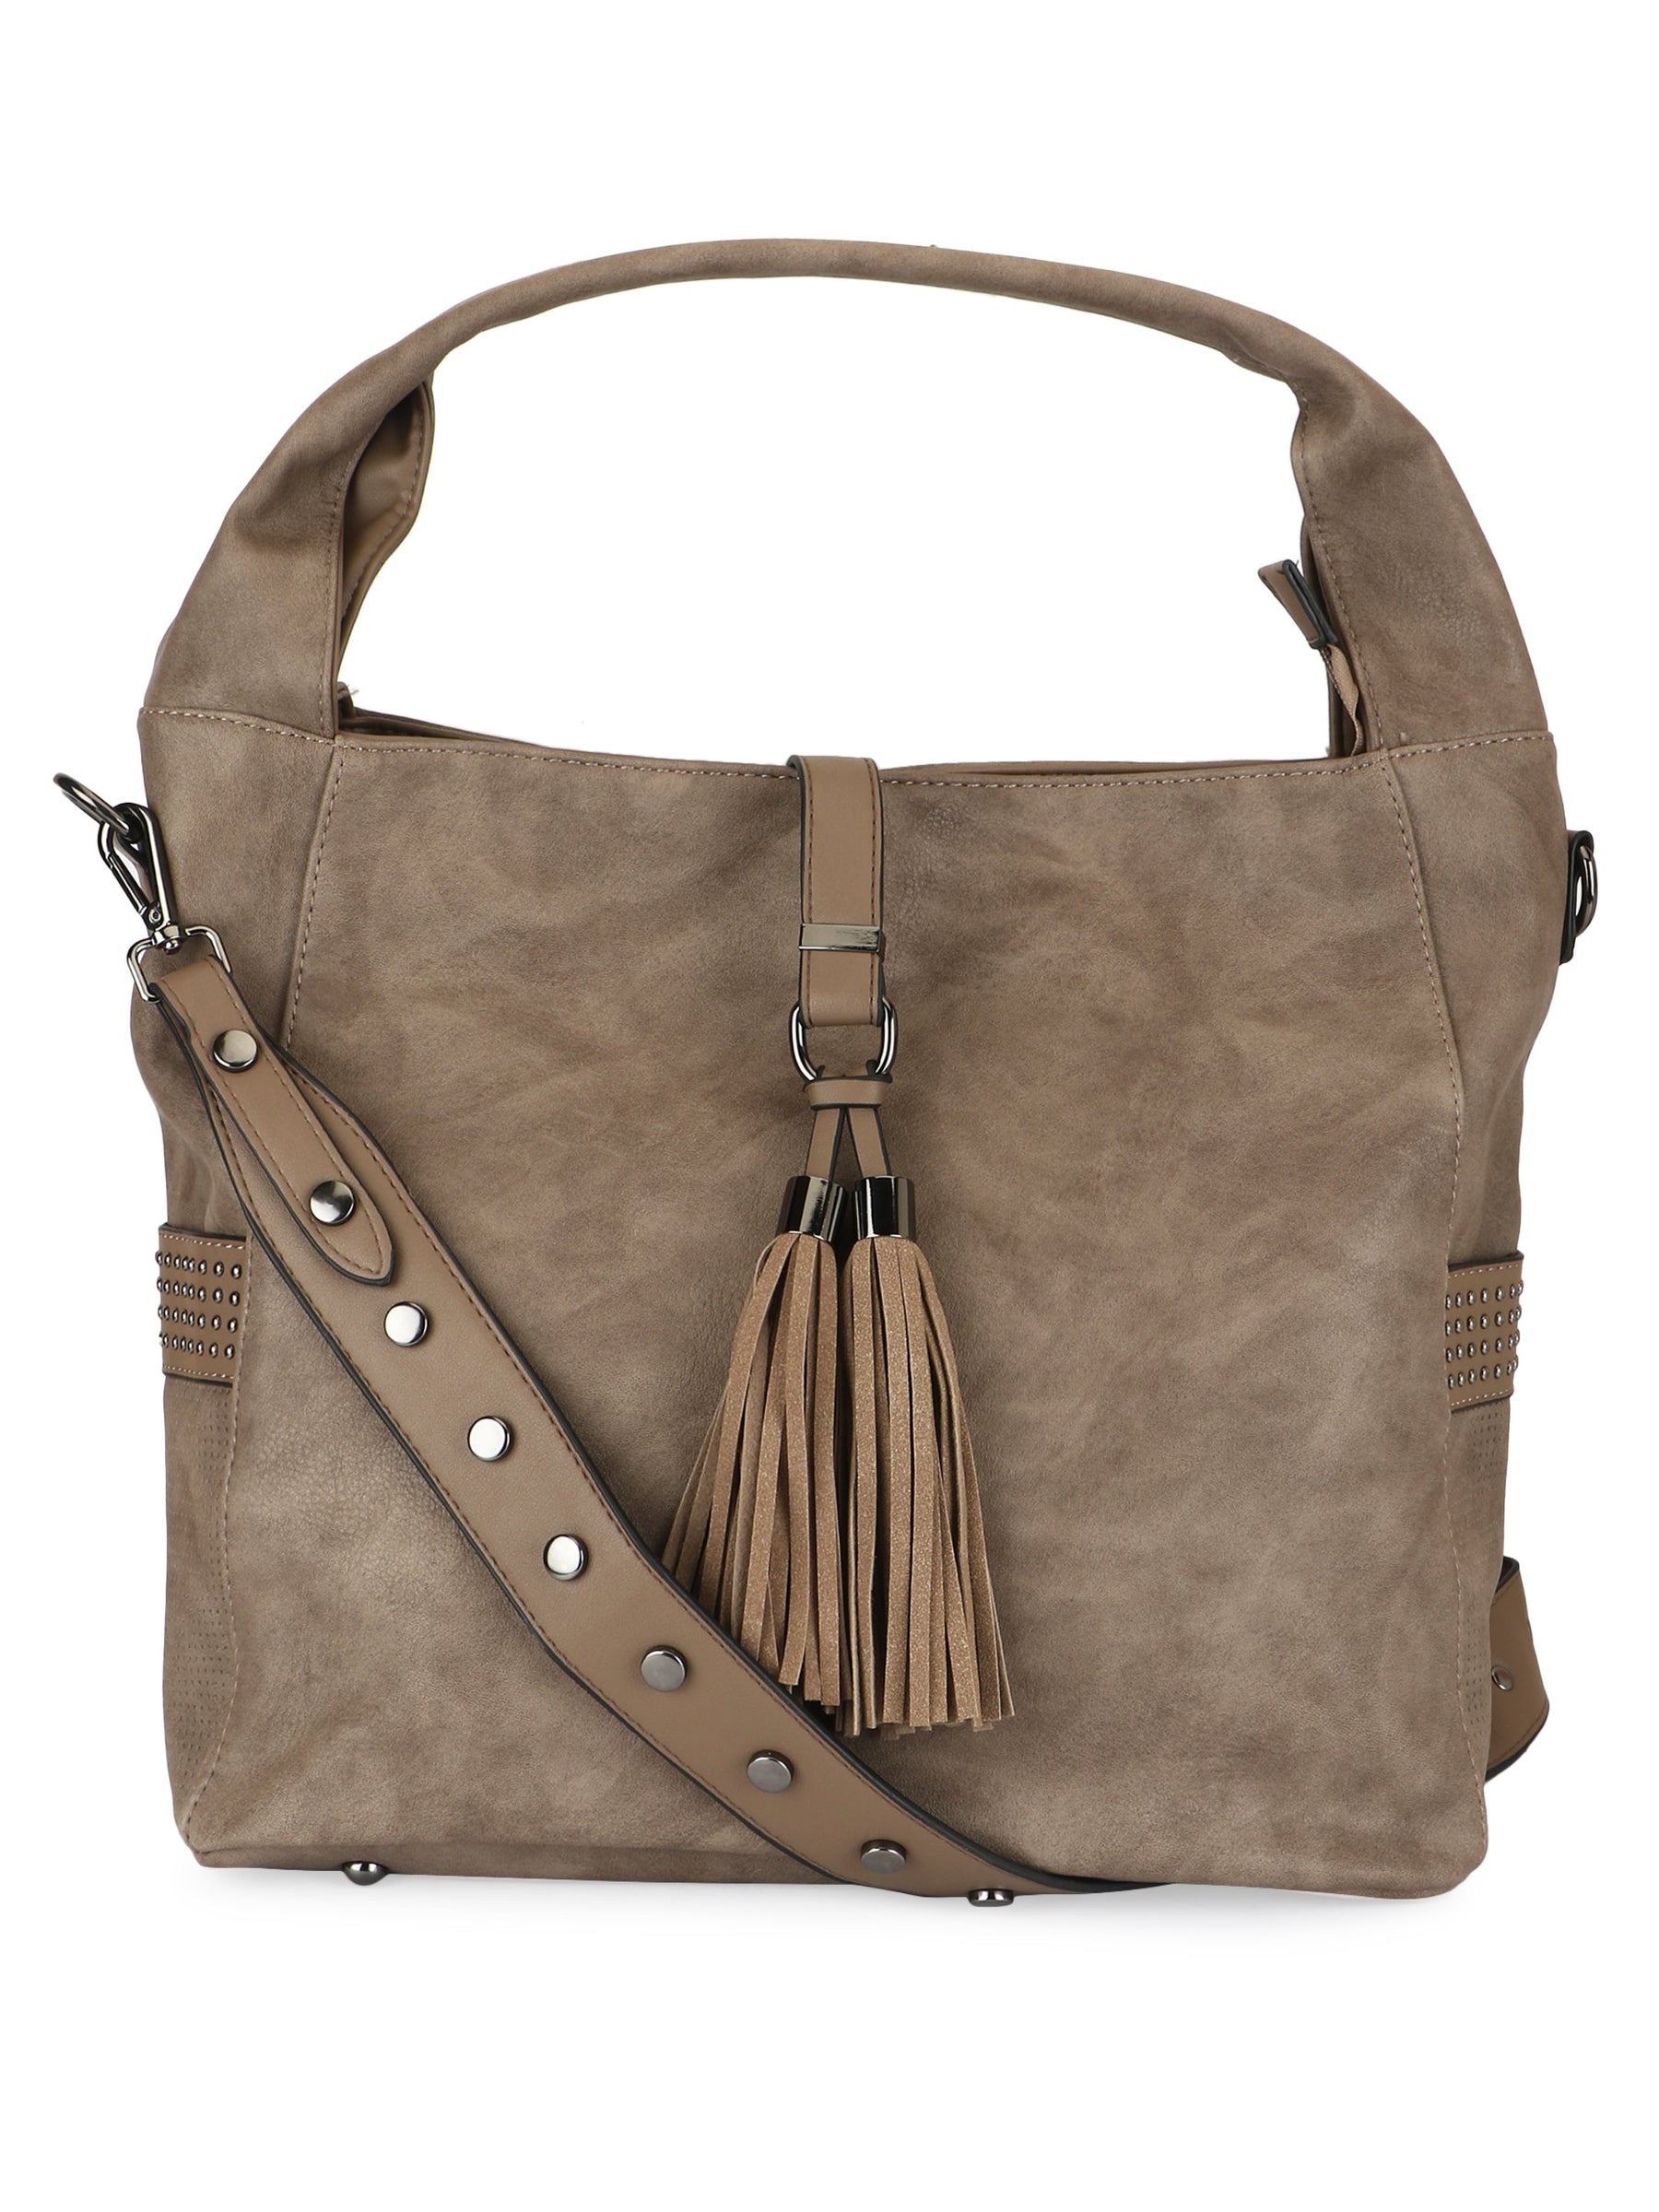 Studded Bag With Tassel